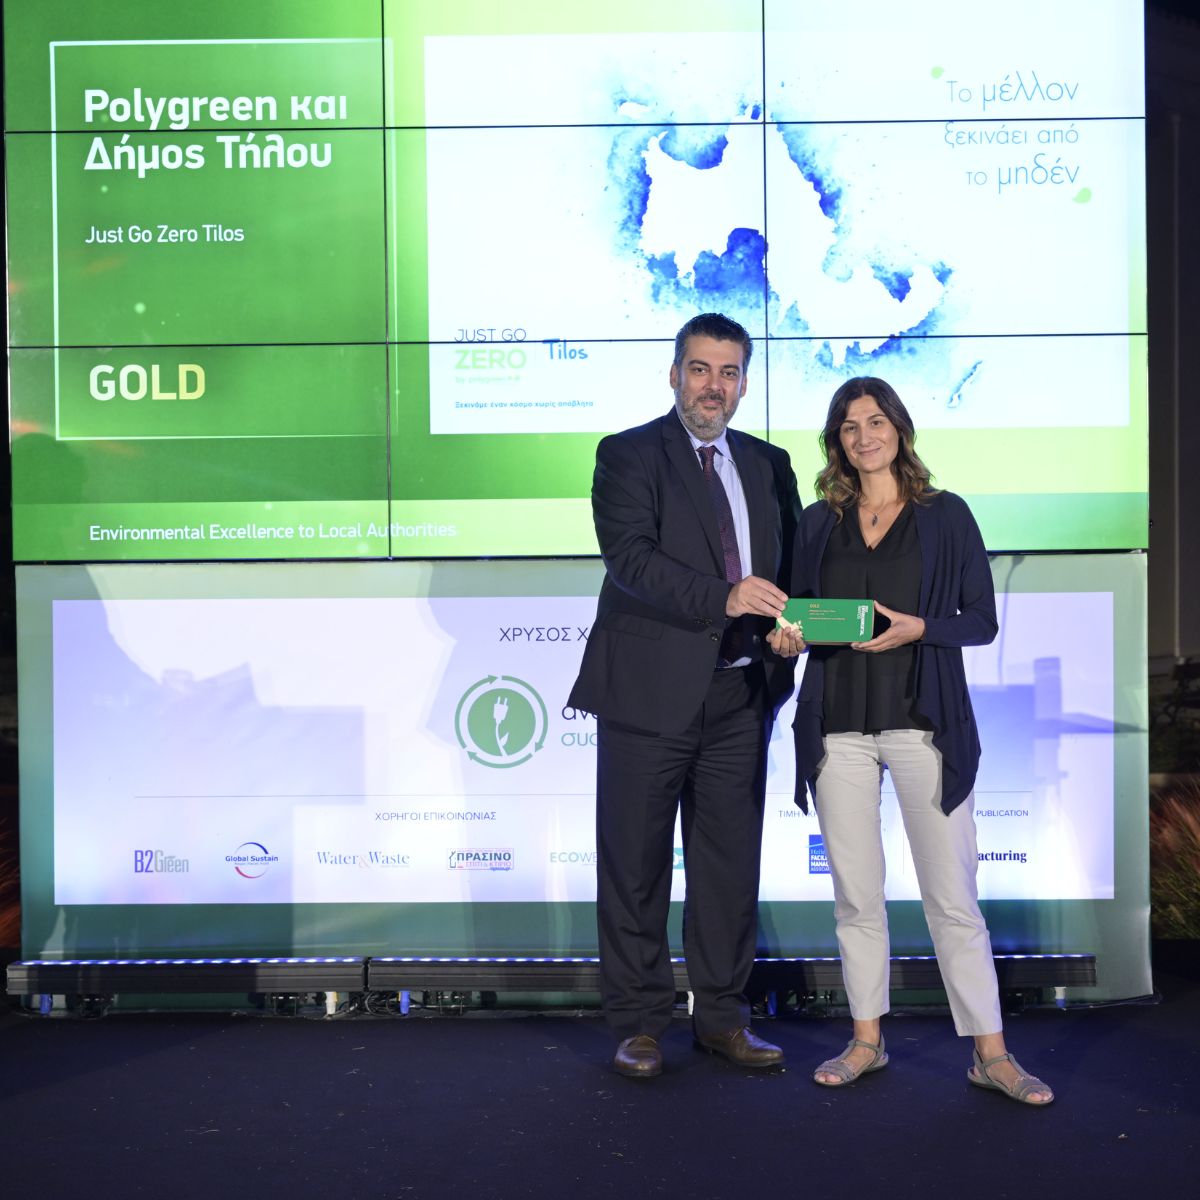 Polygreen: Δύο Περιβαλλοντικά βραβεία για την πρωτοβουλία Just go Zero Tilos